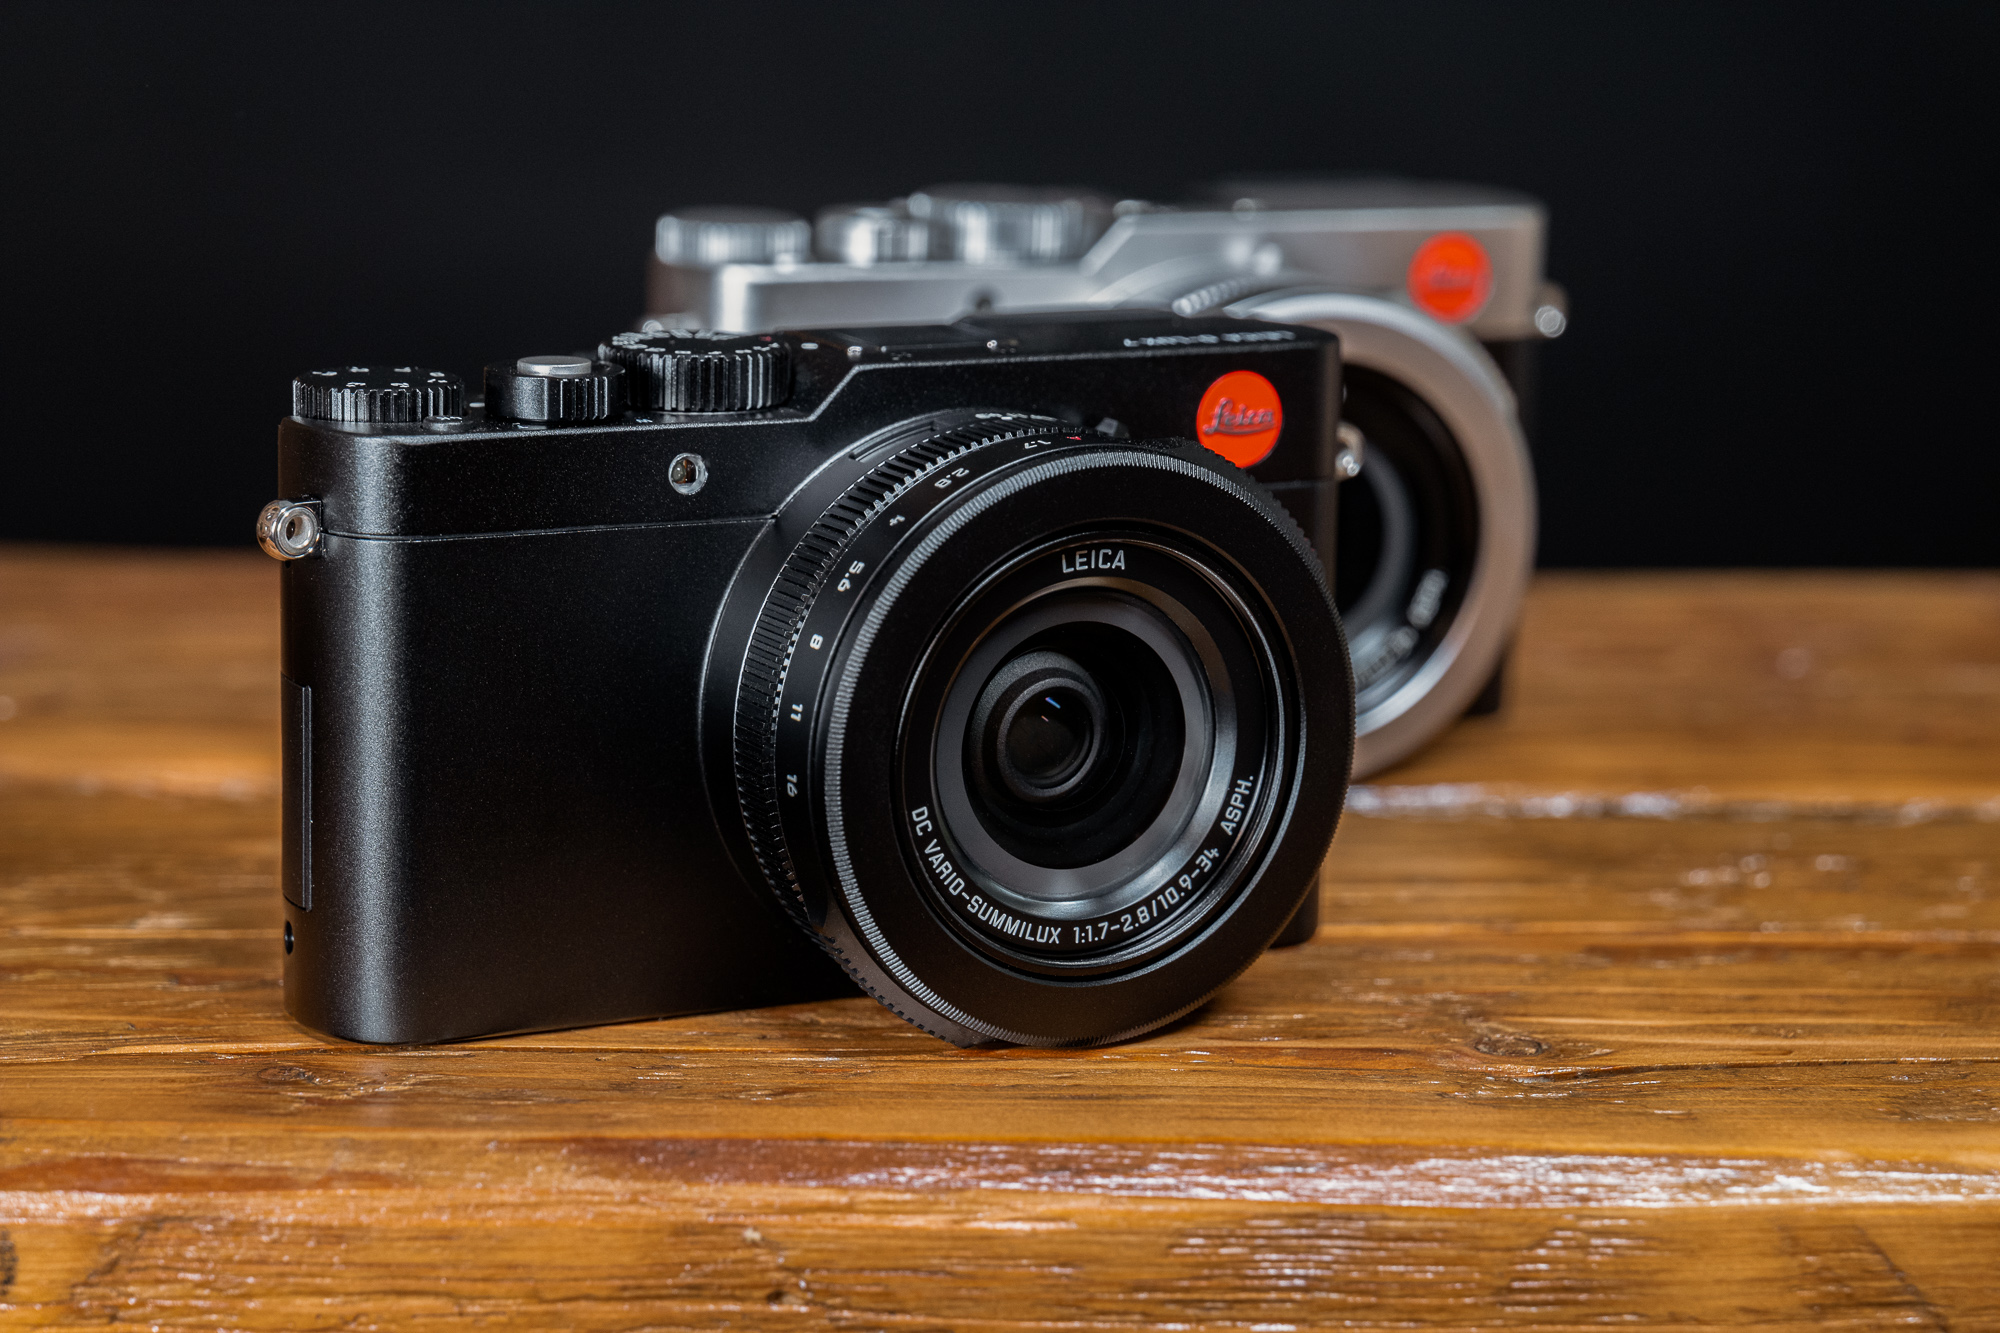 Ontwaken Wonderbaarlijk eiland Leica D-Lux 7 Now Available in Black | Red Dot Forum